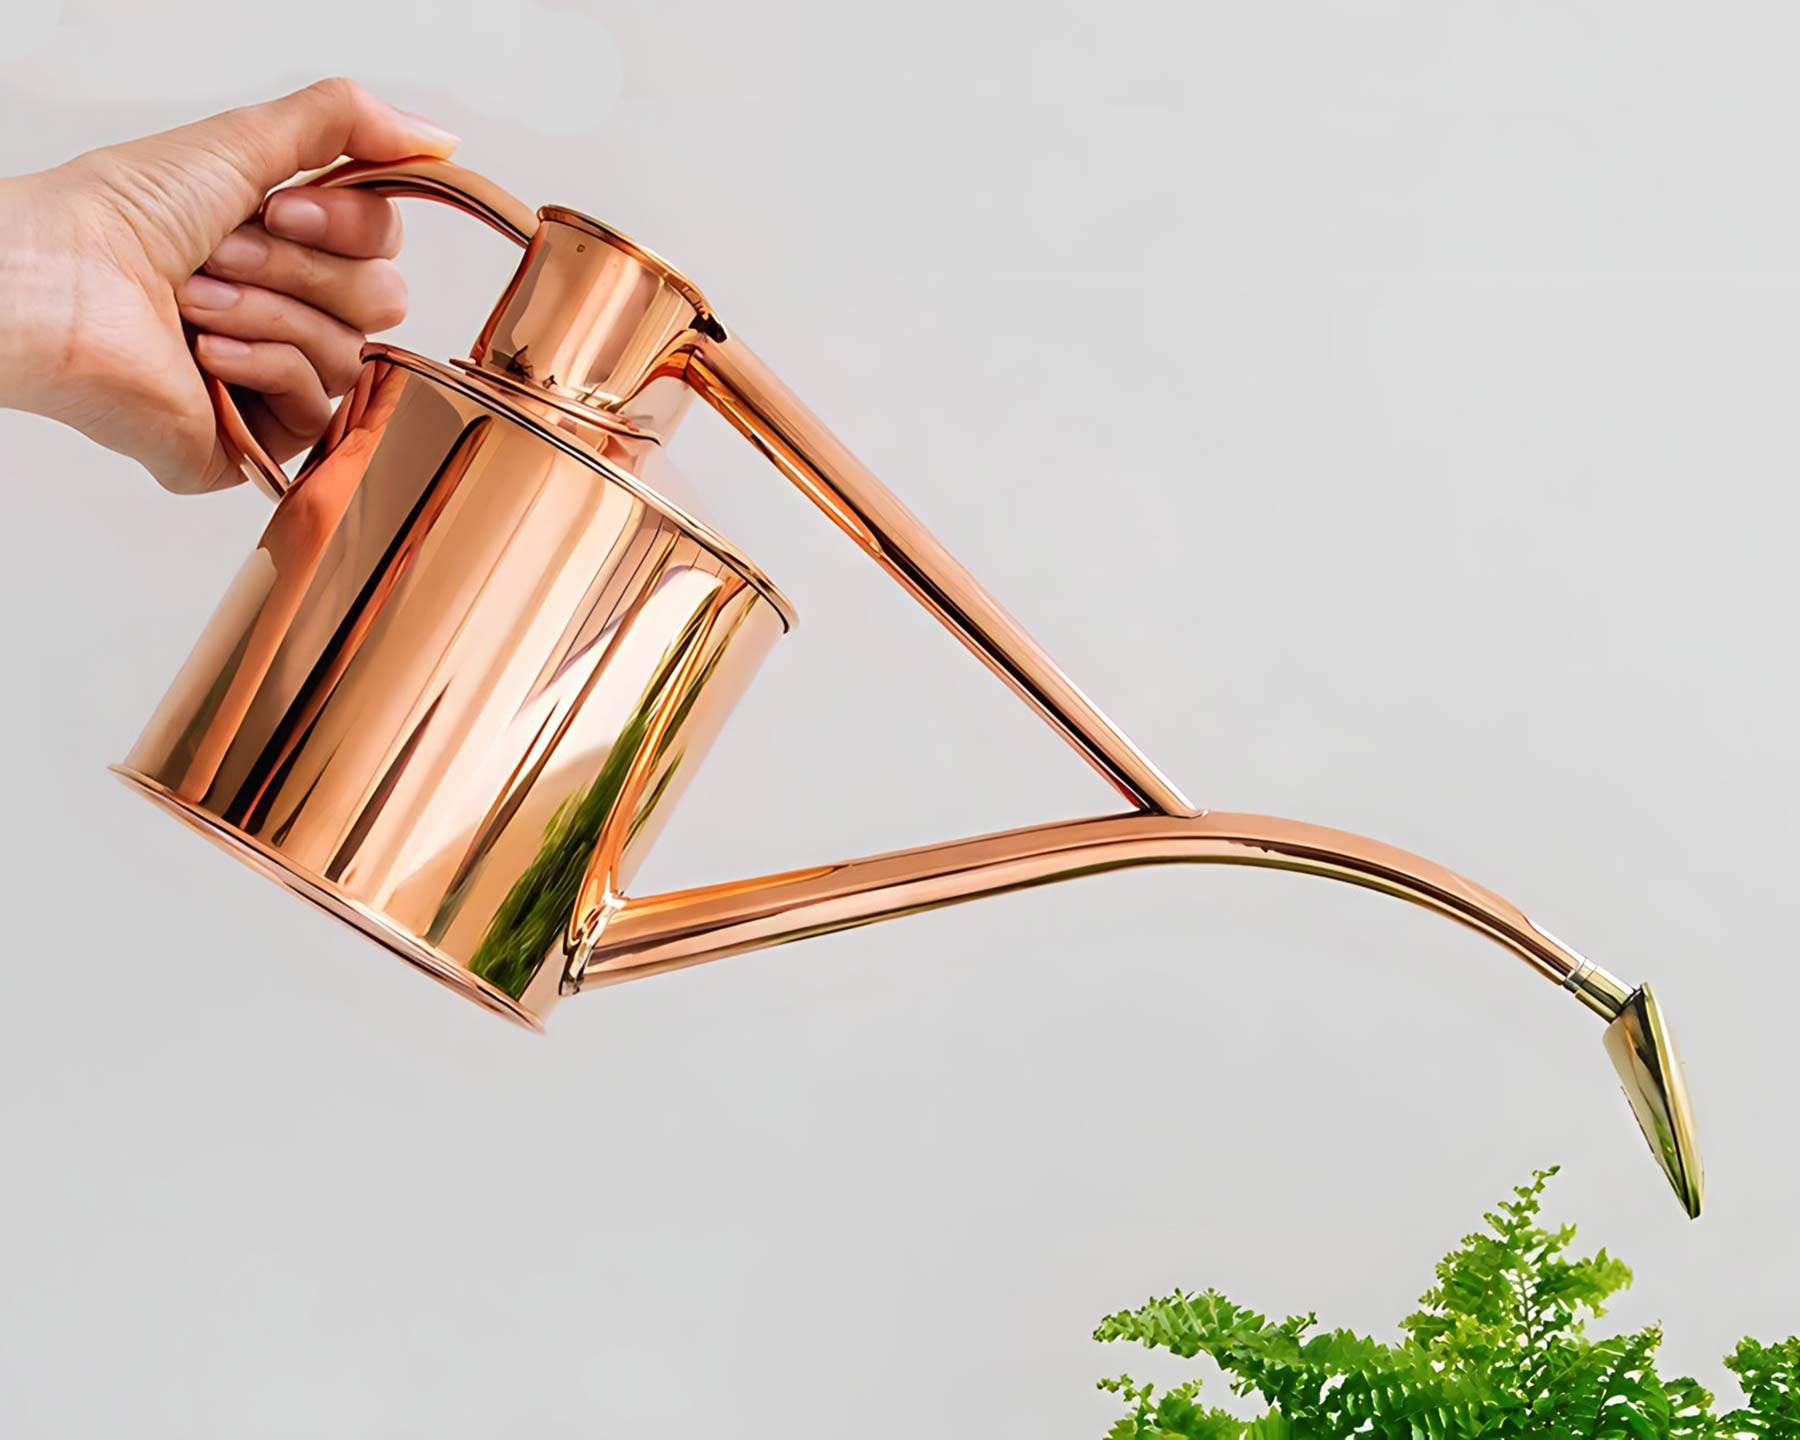 Haws Classic Copper indoor watering can